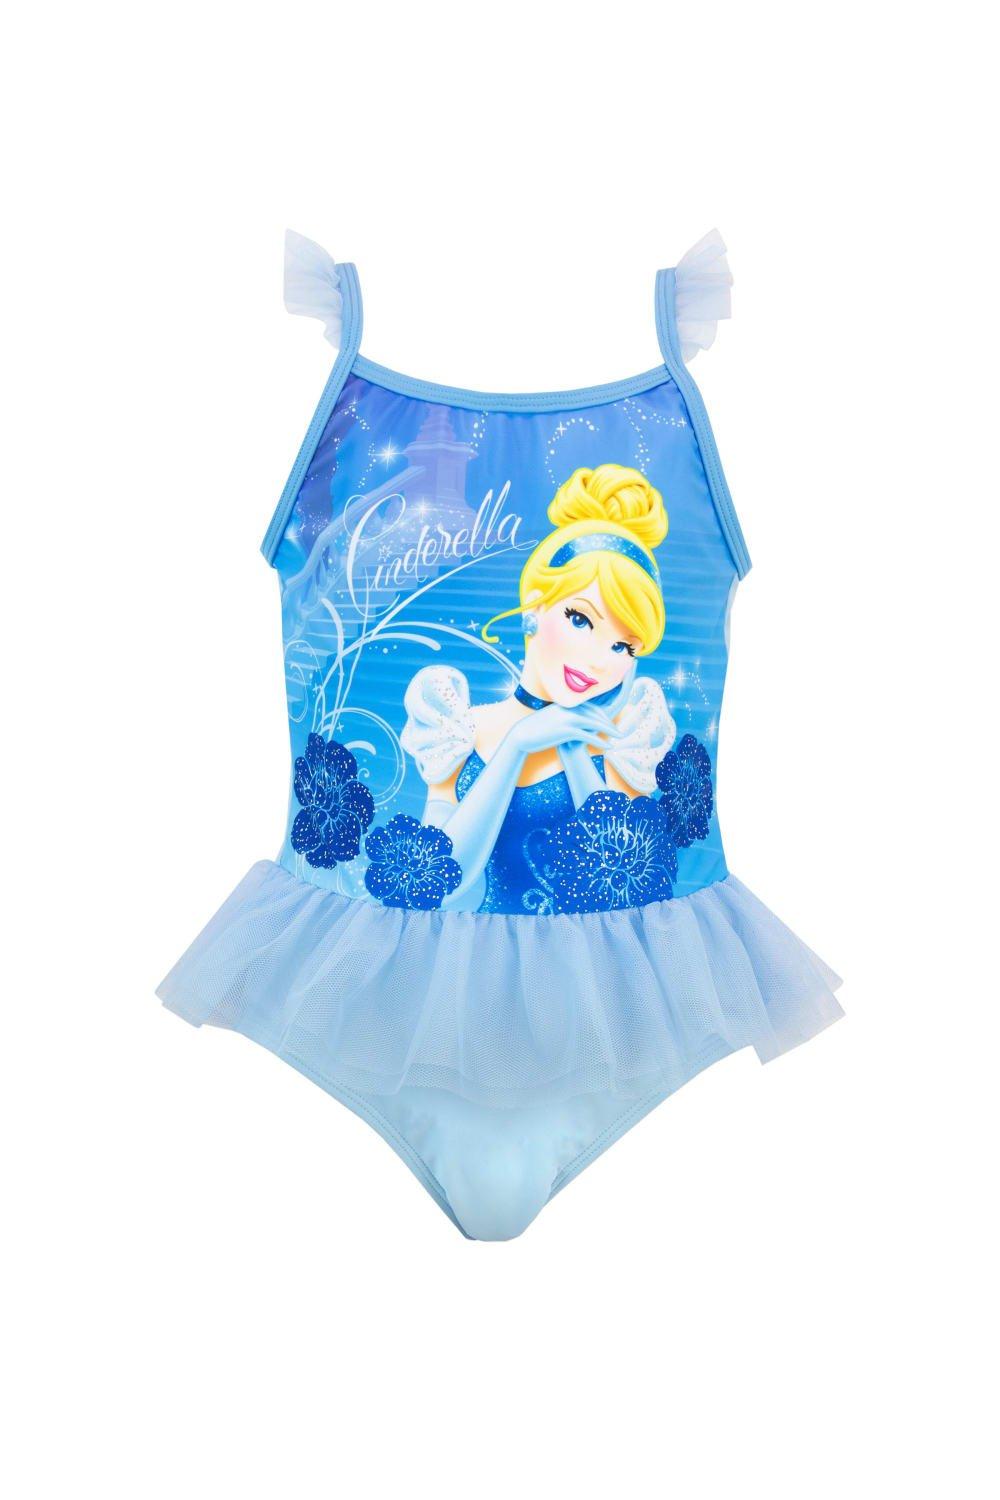 Cinderella Swimsuit